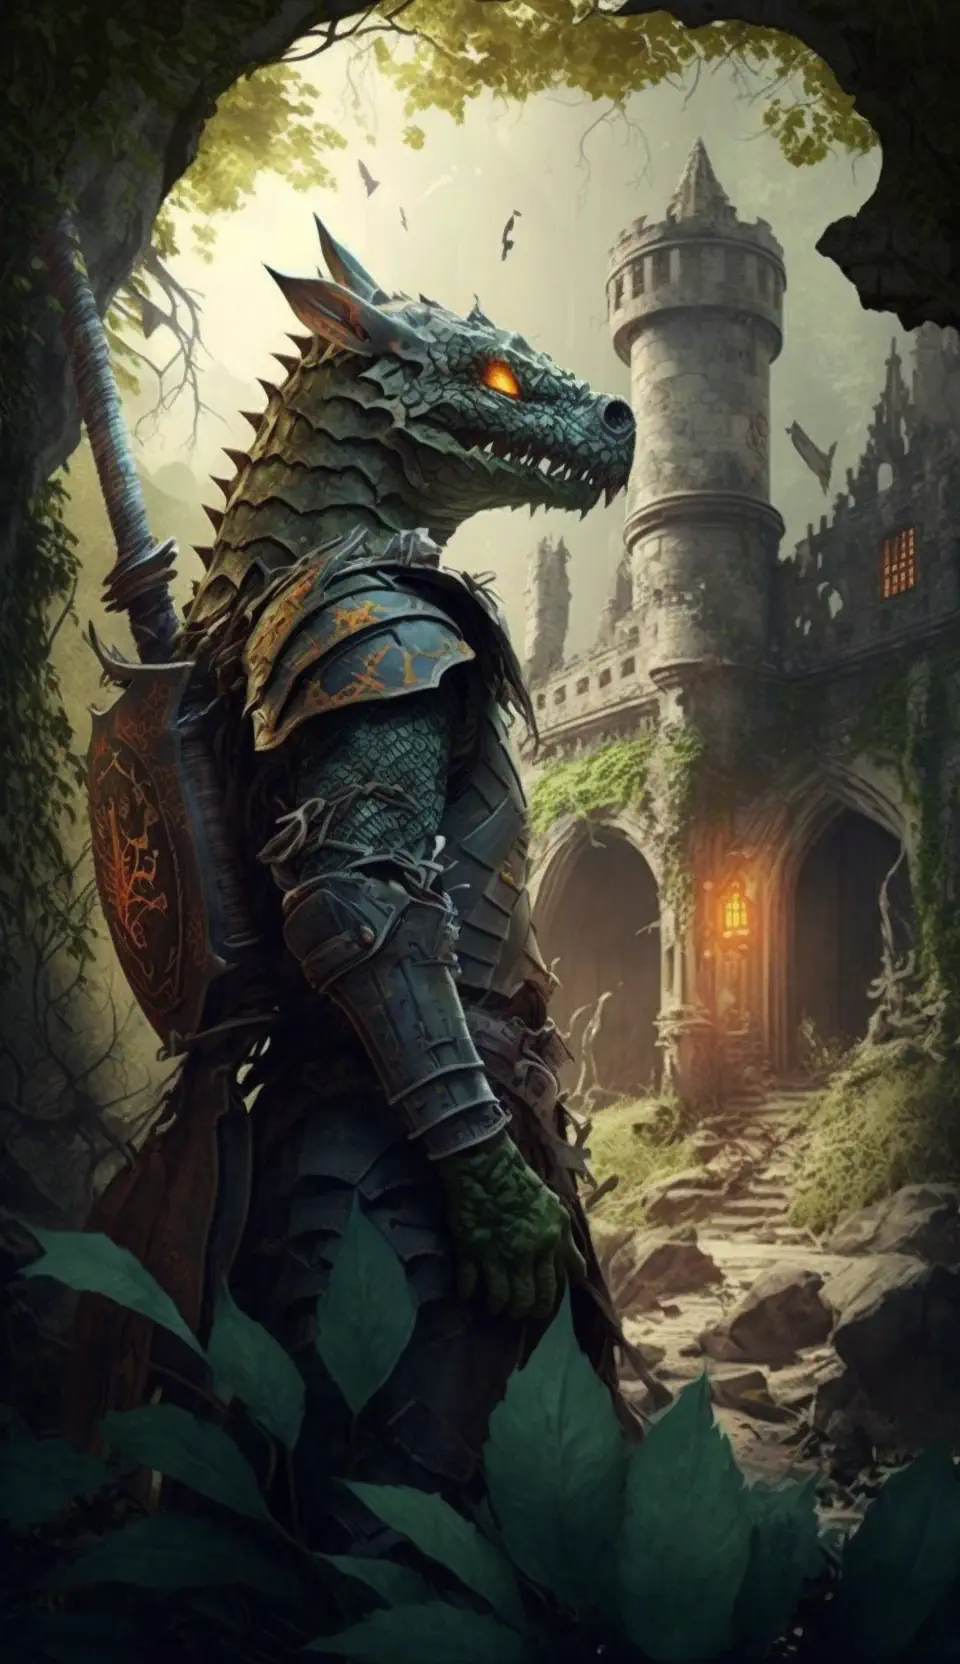 Drakono_a_noble_dragon_is_fighting_against_medieval_knights_jun_8e30b9af-2b9a-4355-ba18-602f82daedbb